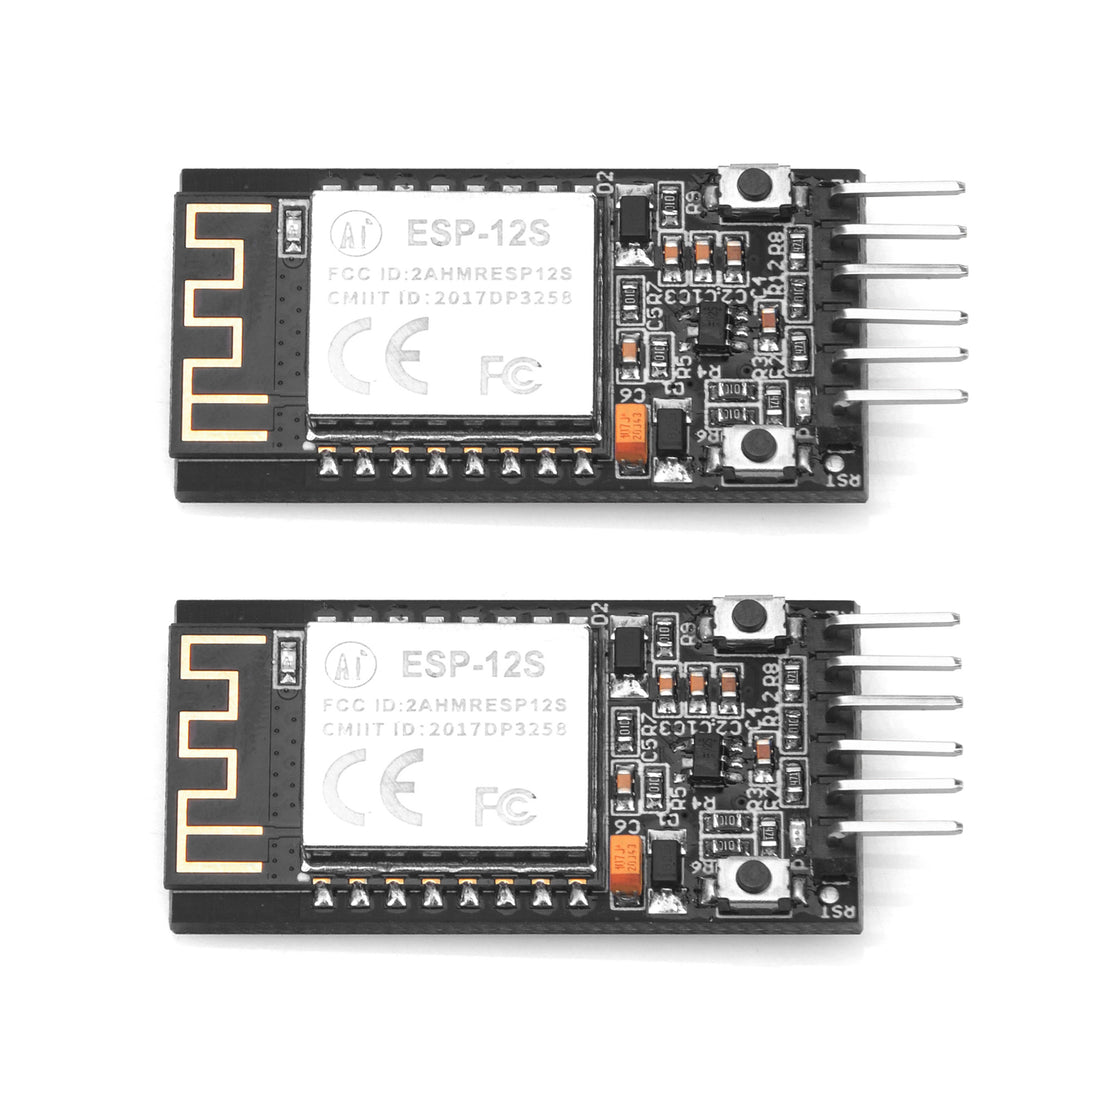 OSOYOO ESP8266 WiFi-Modul, ESP-12S WiFi Serial Module Board für Arduino, Wireless Transceiver Remote Port Network Development Board